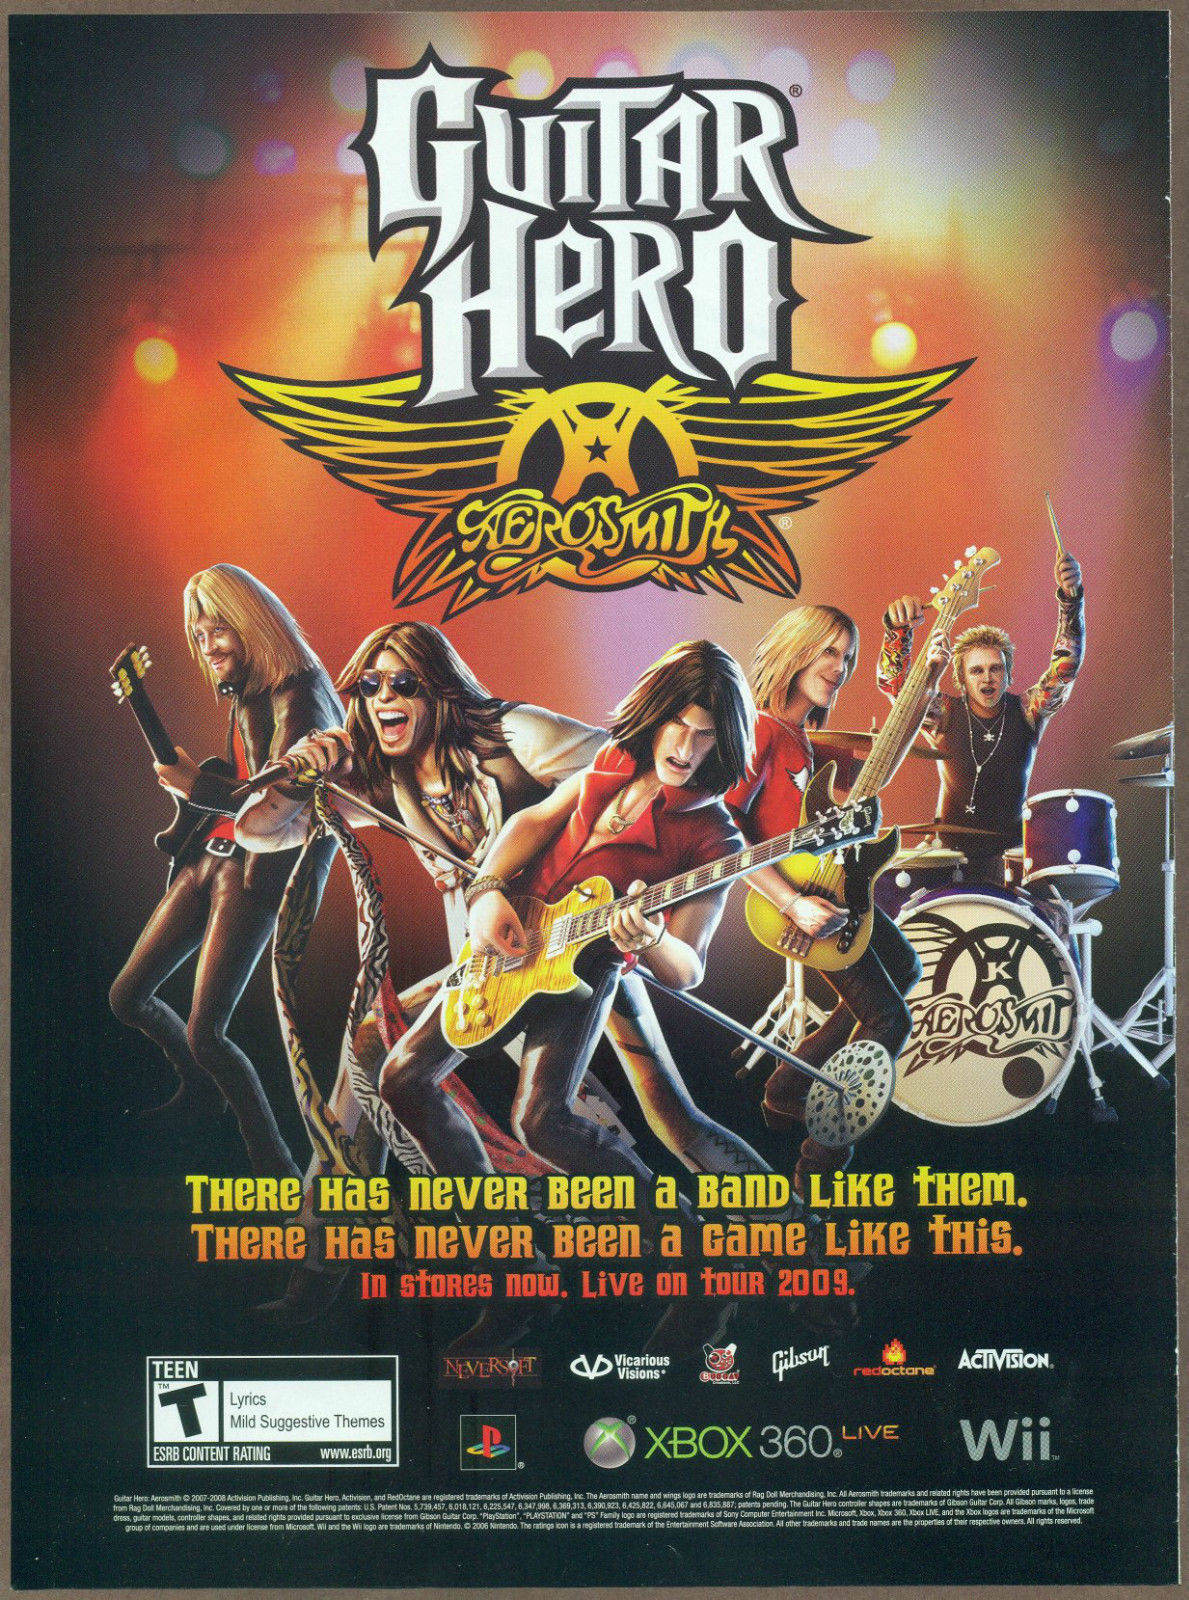 Guitar Hero Aerosmith Ps2 Cover